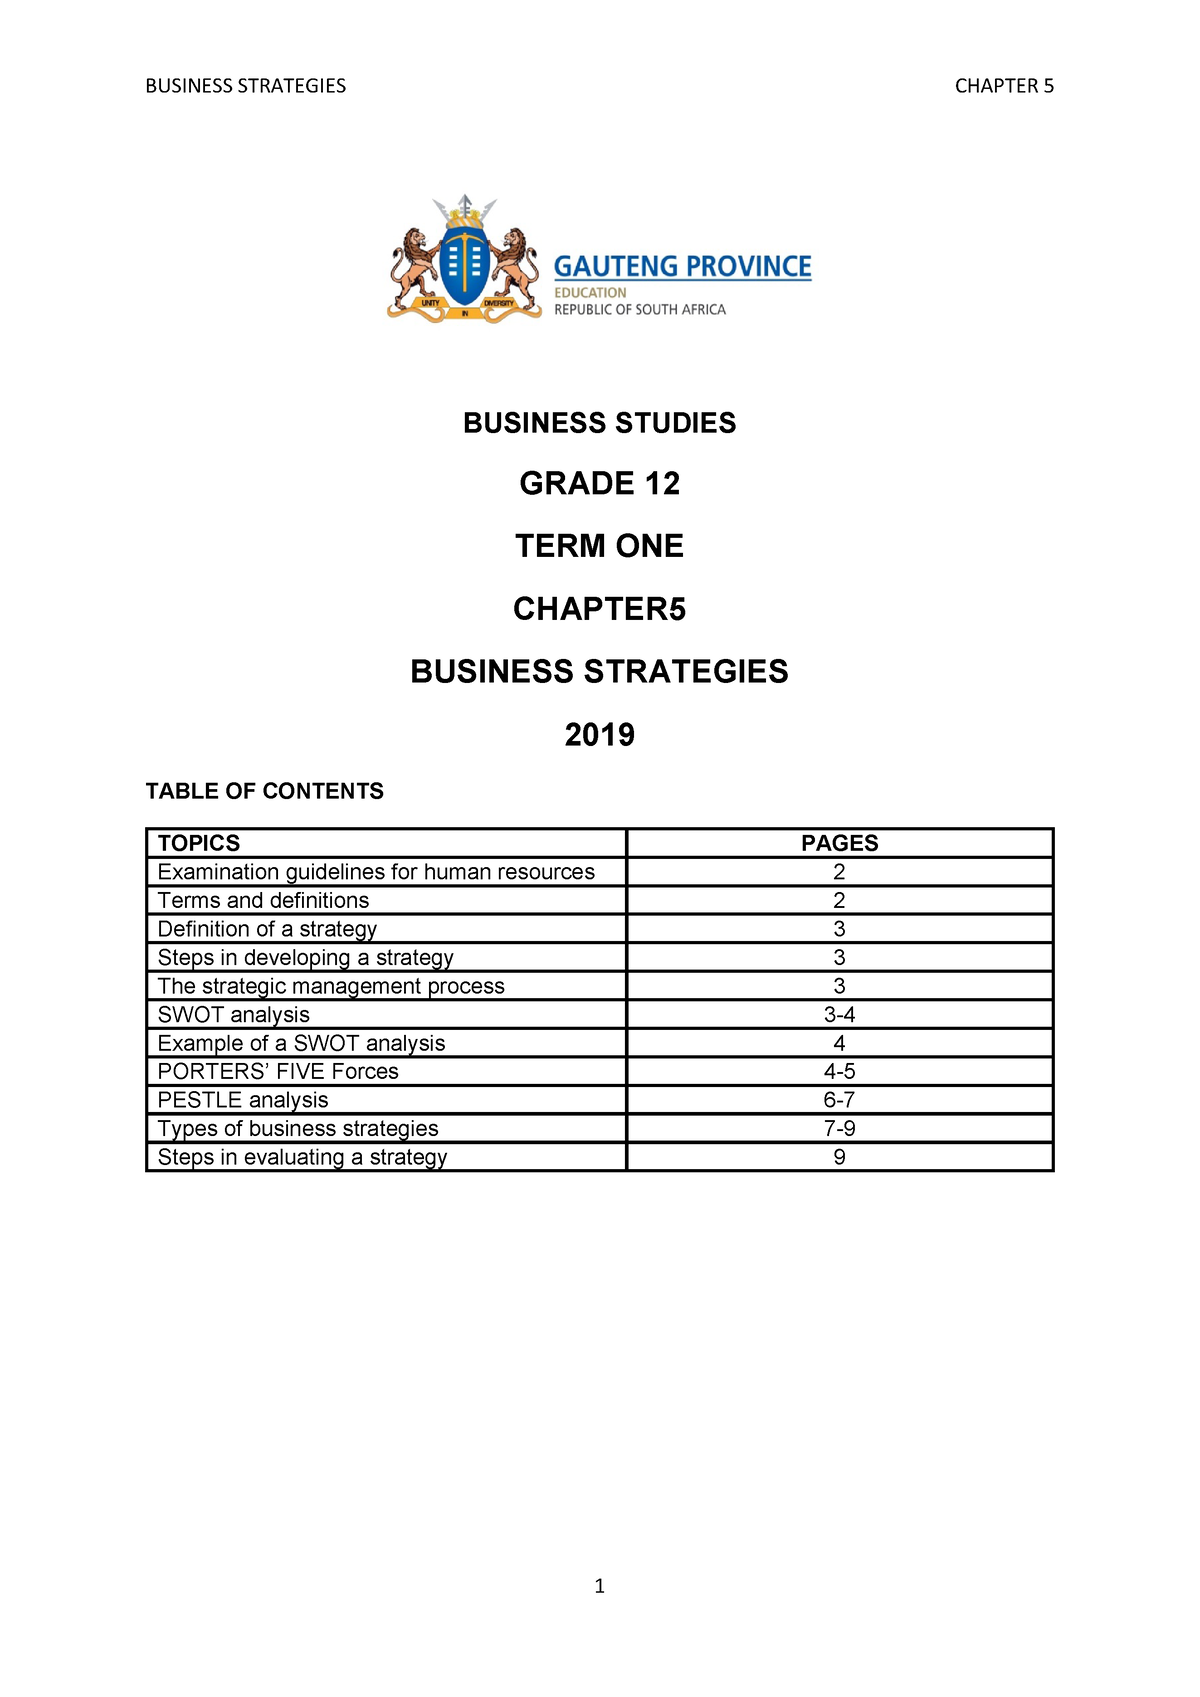 business studies grade 12 employment equity act essay